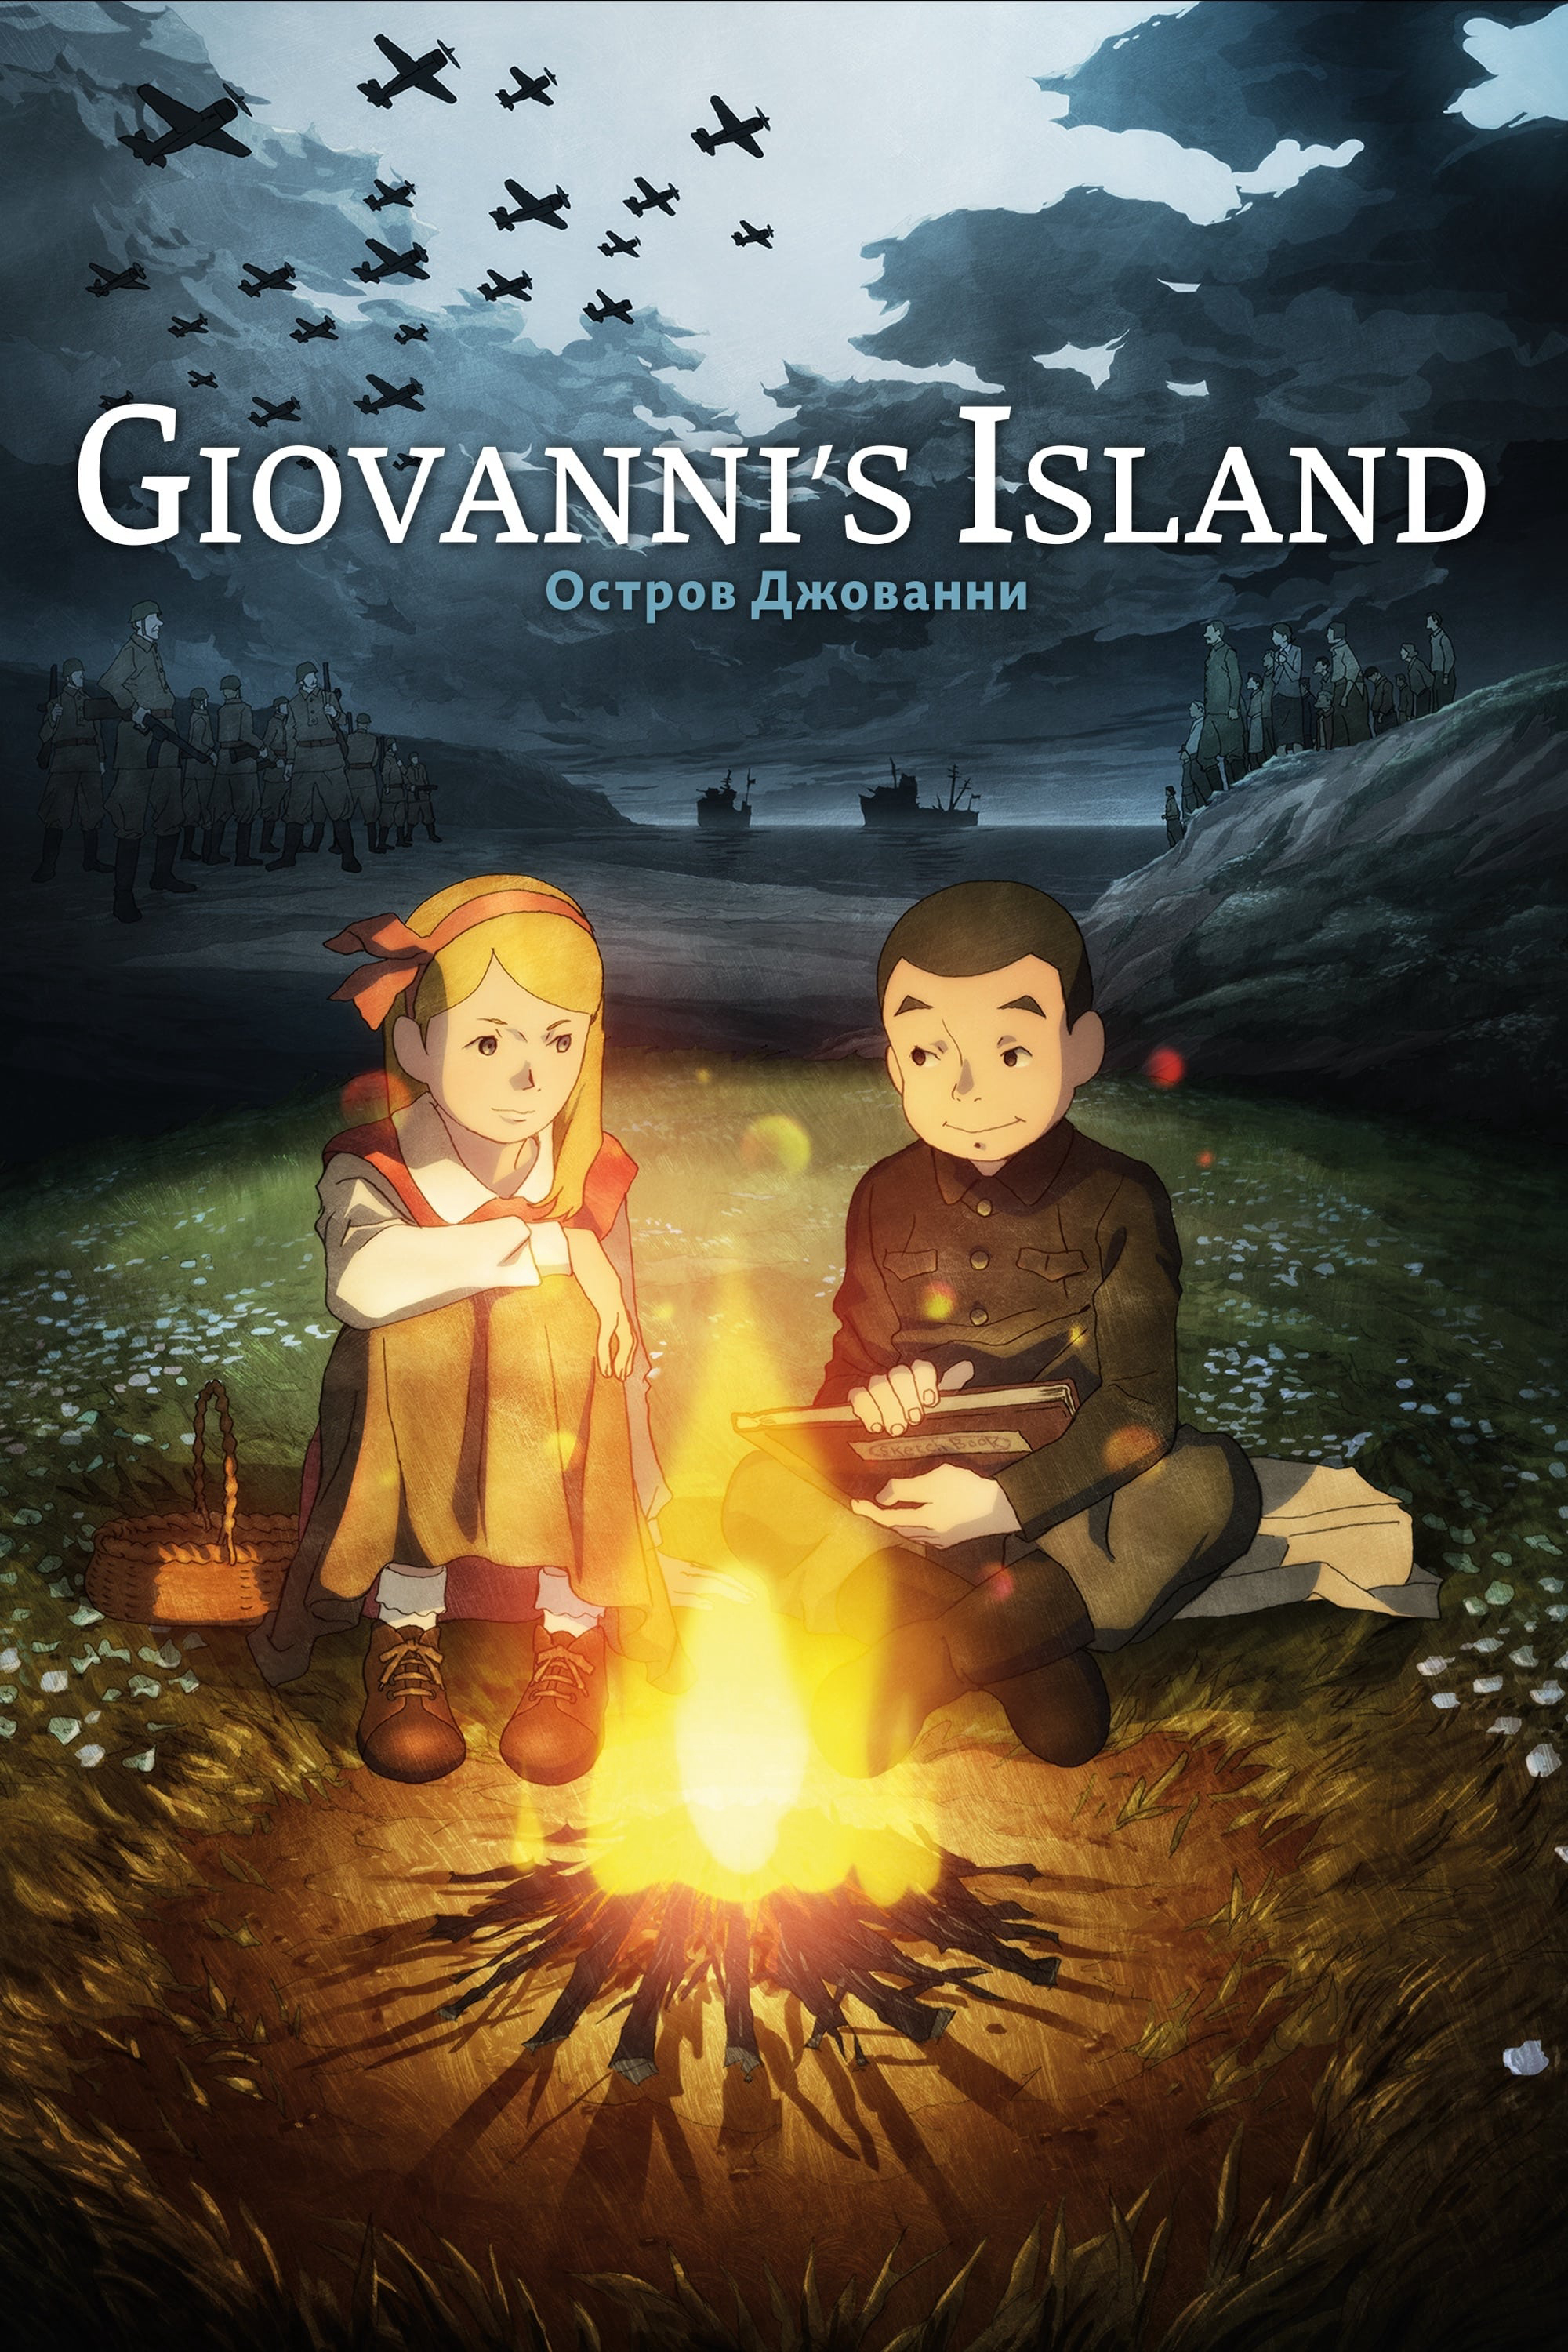 Hòn Đảo Của Giovanni - Giovanni's Island